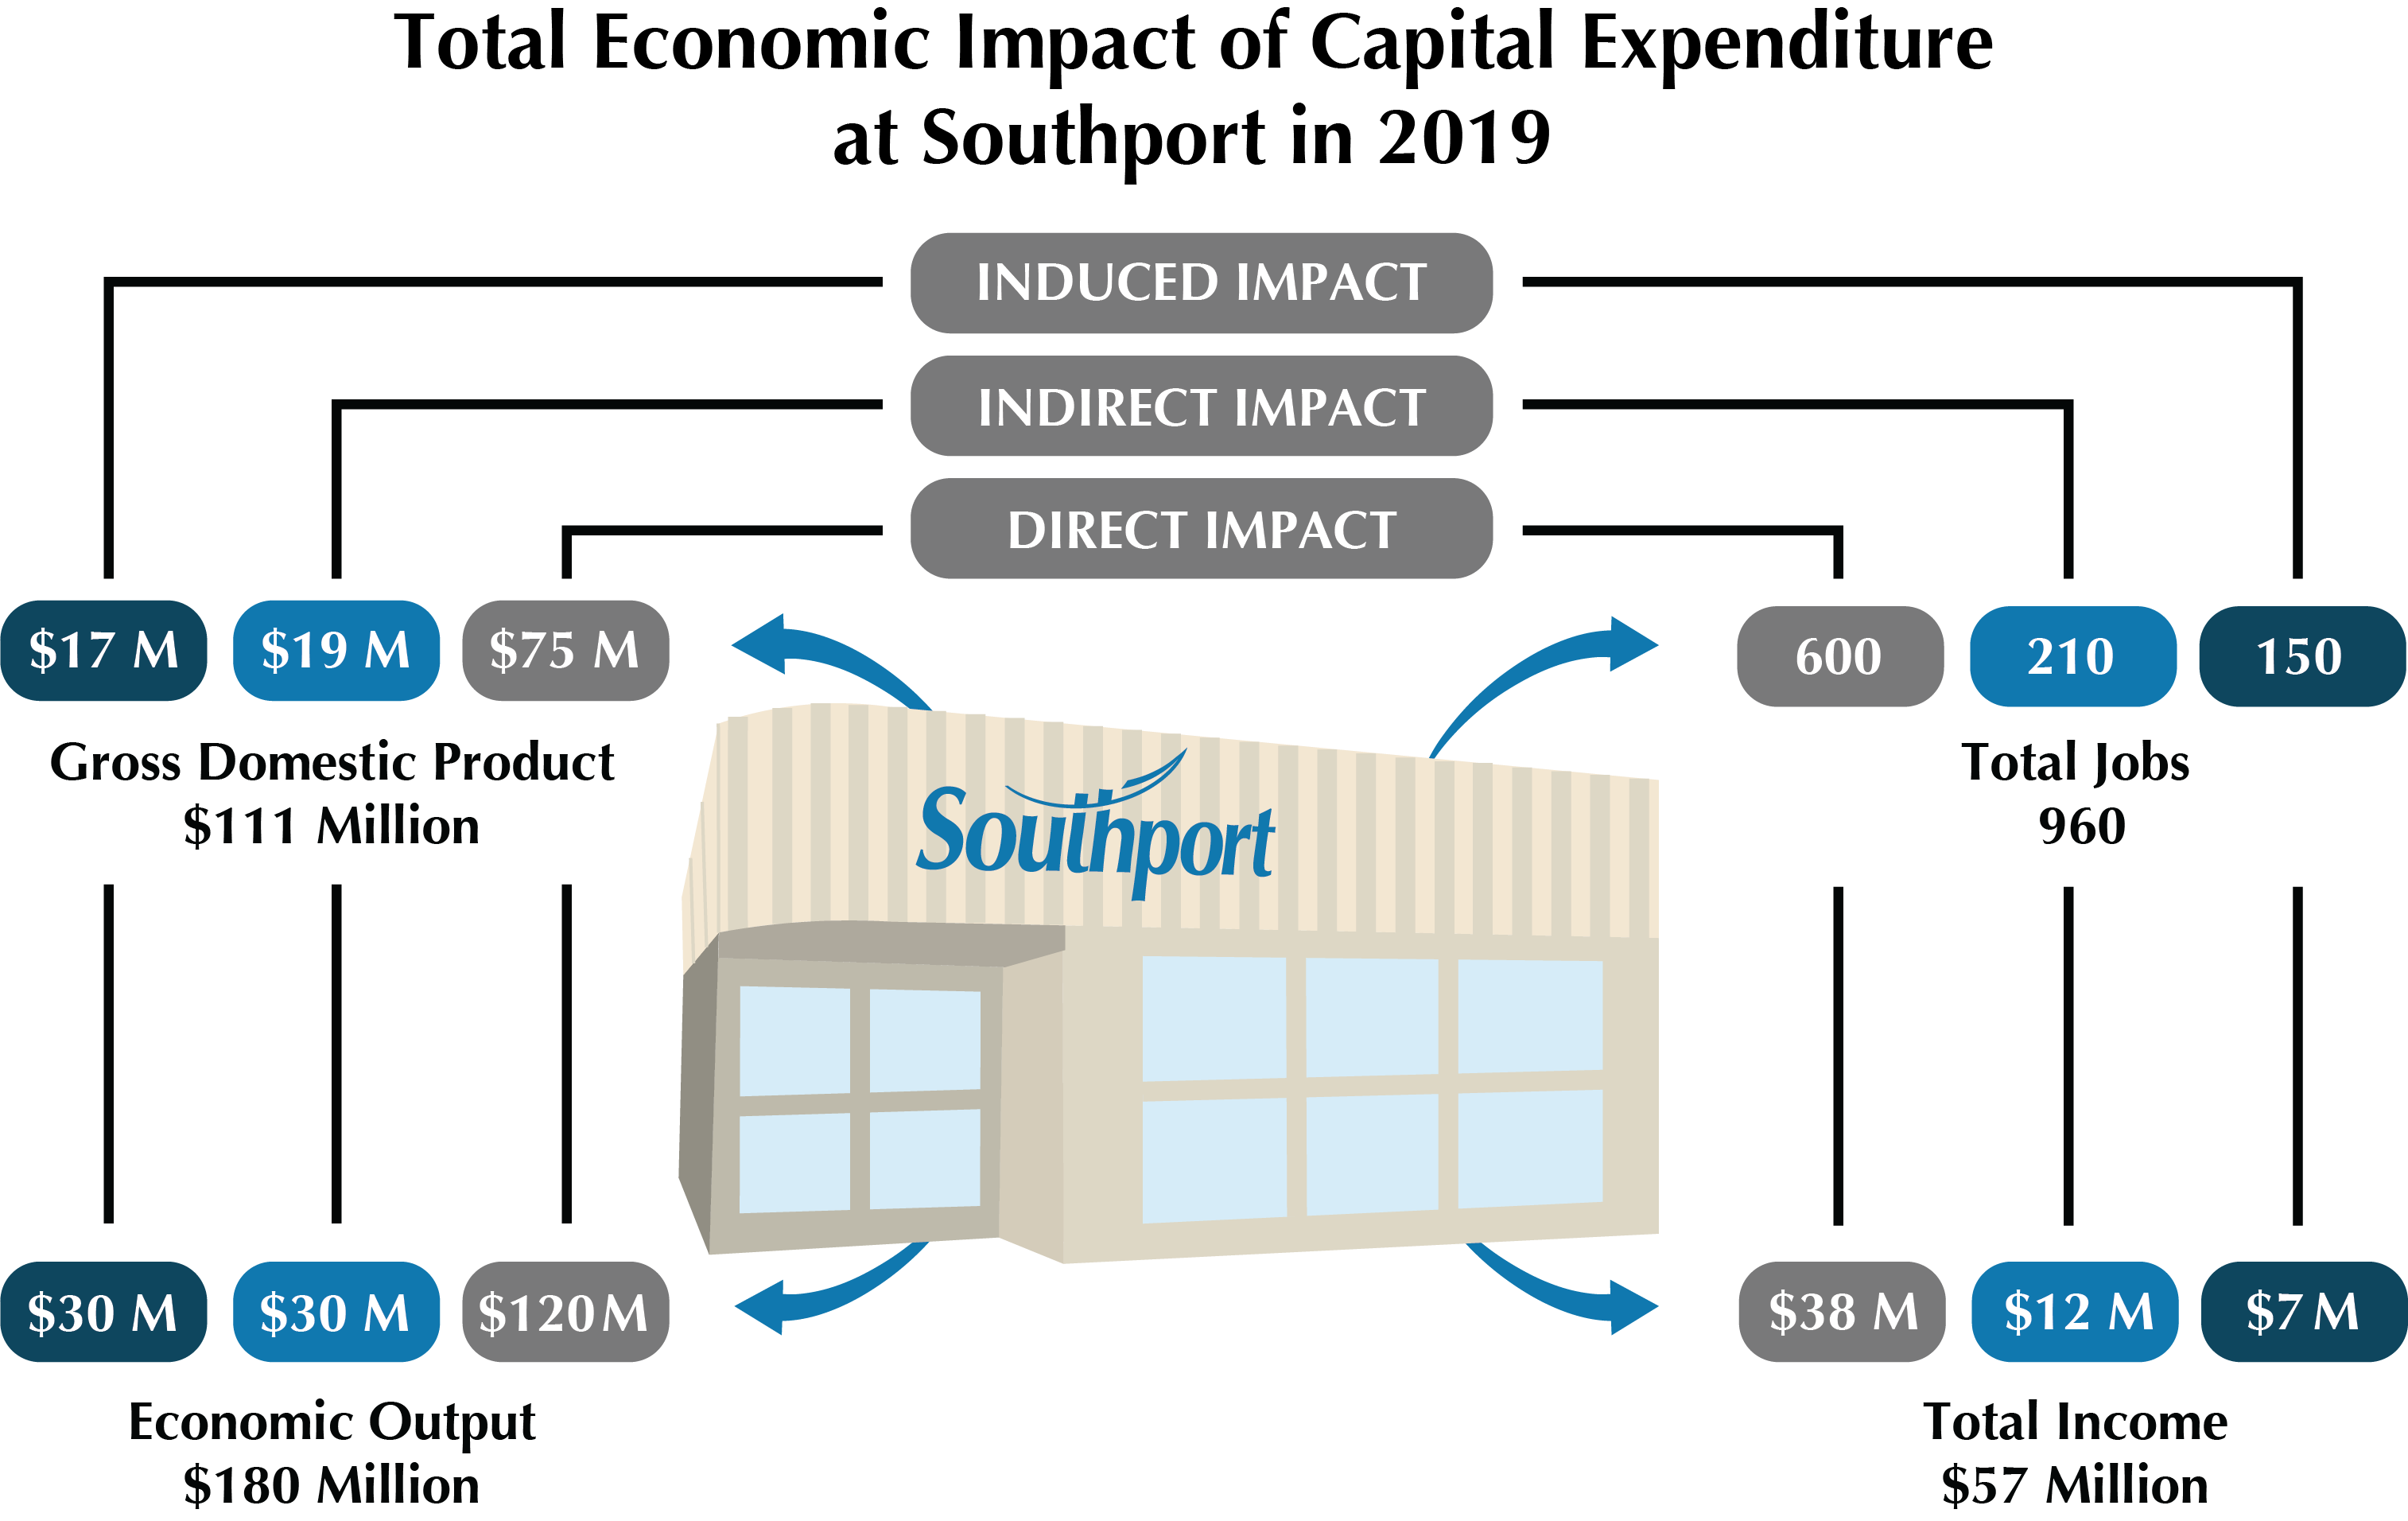 Southport Economic Impact